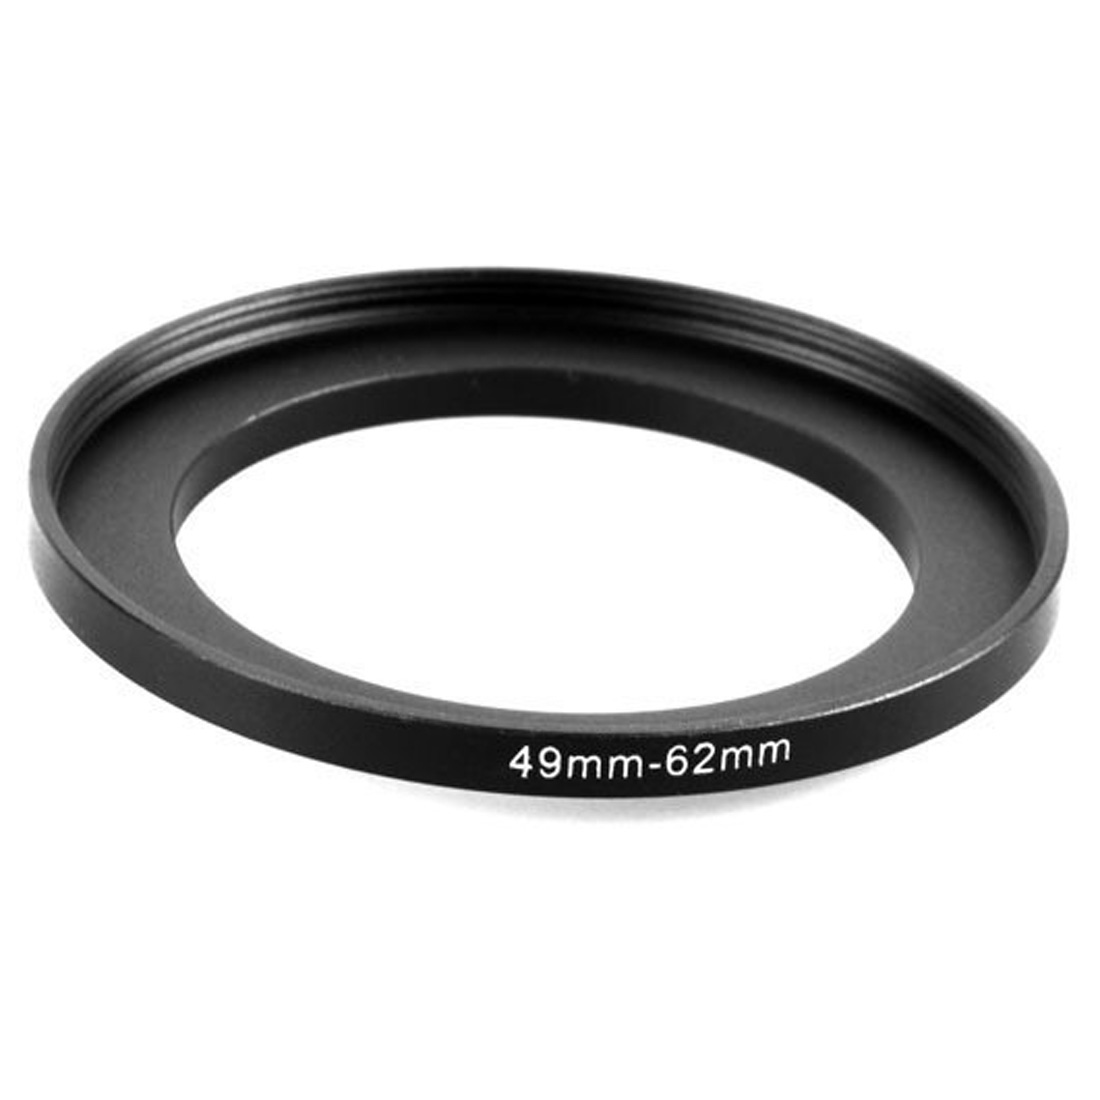 Step-up ring Minolta 49-62 mm